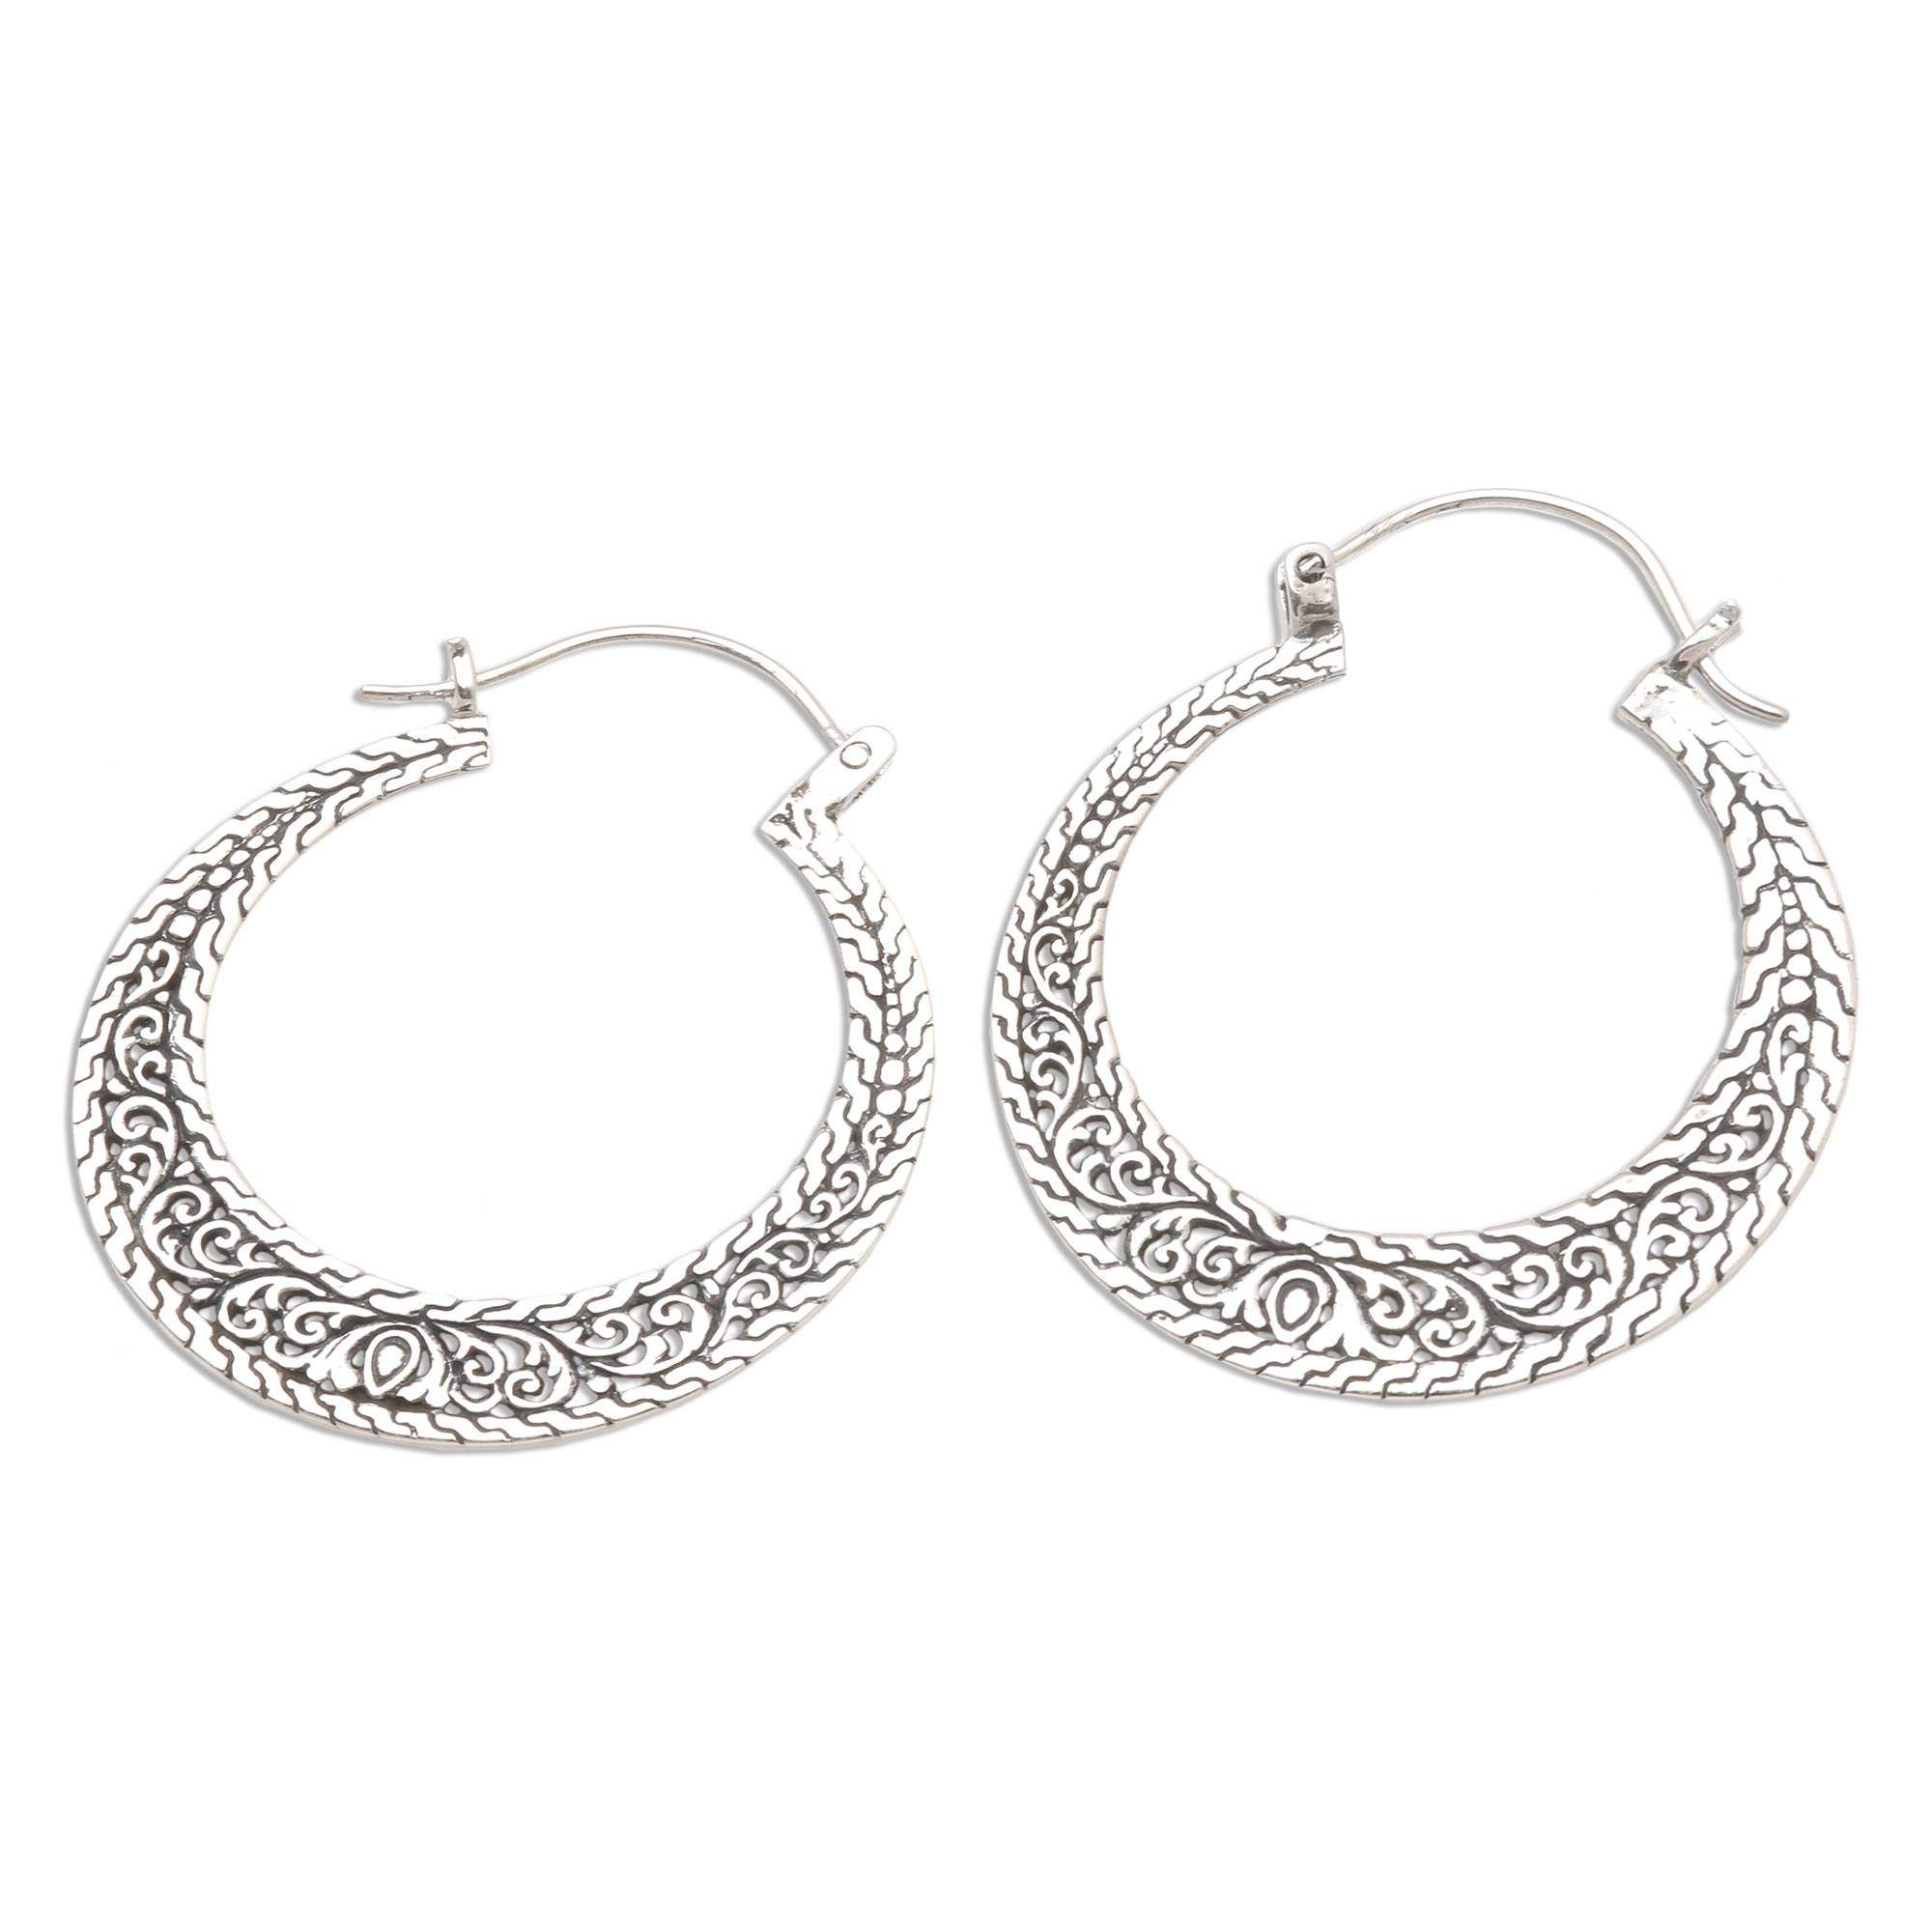 Sterling Silver Hoop Earrings from Bali - Sukawati Circles | NOVICA